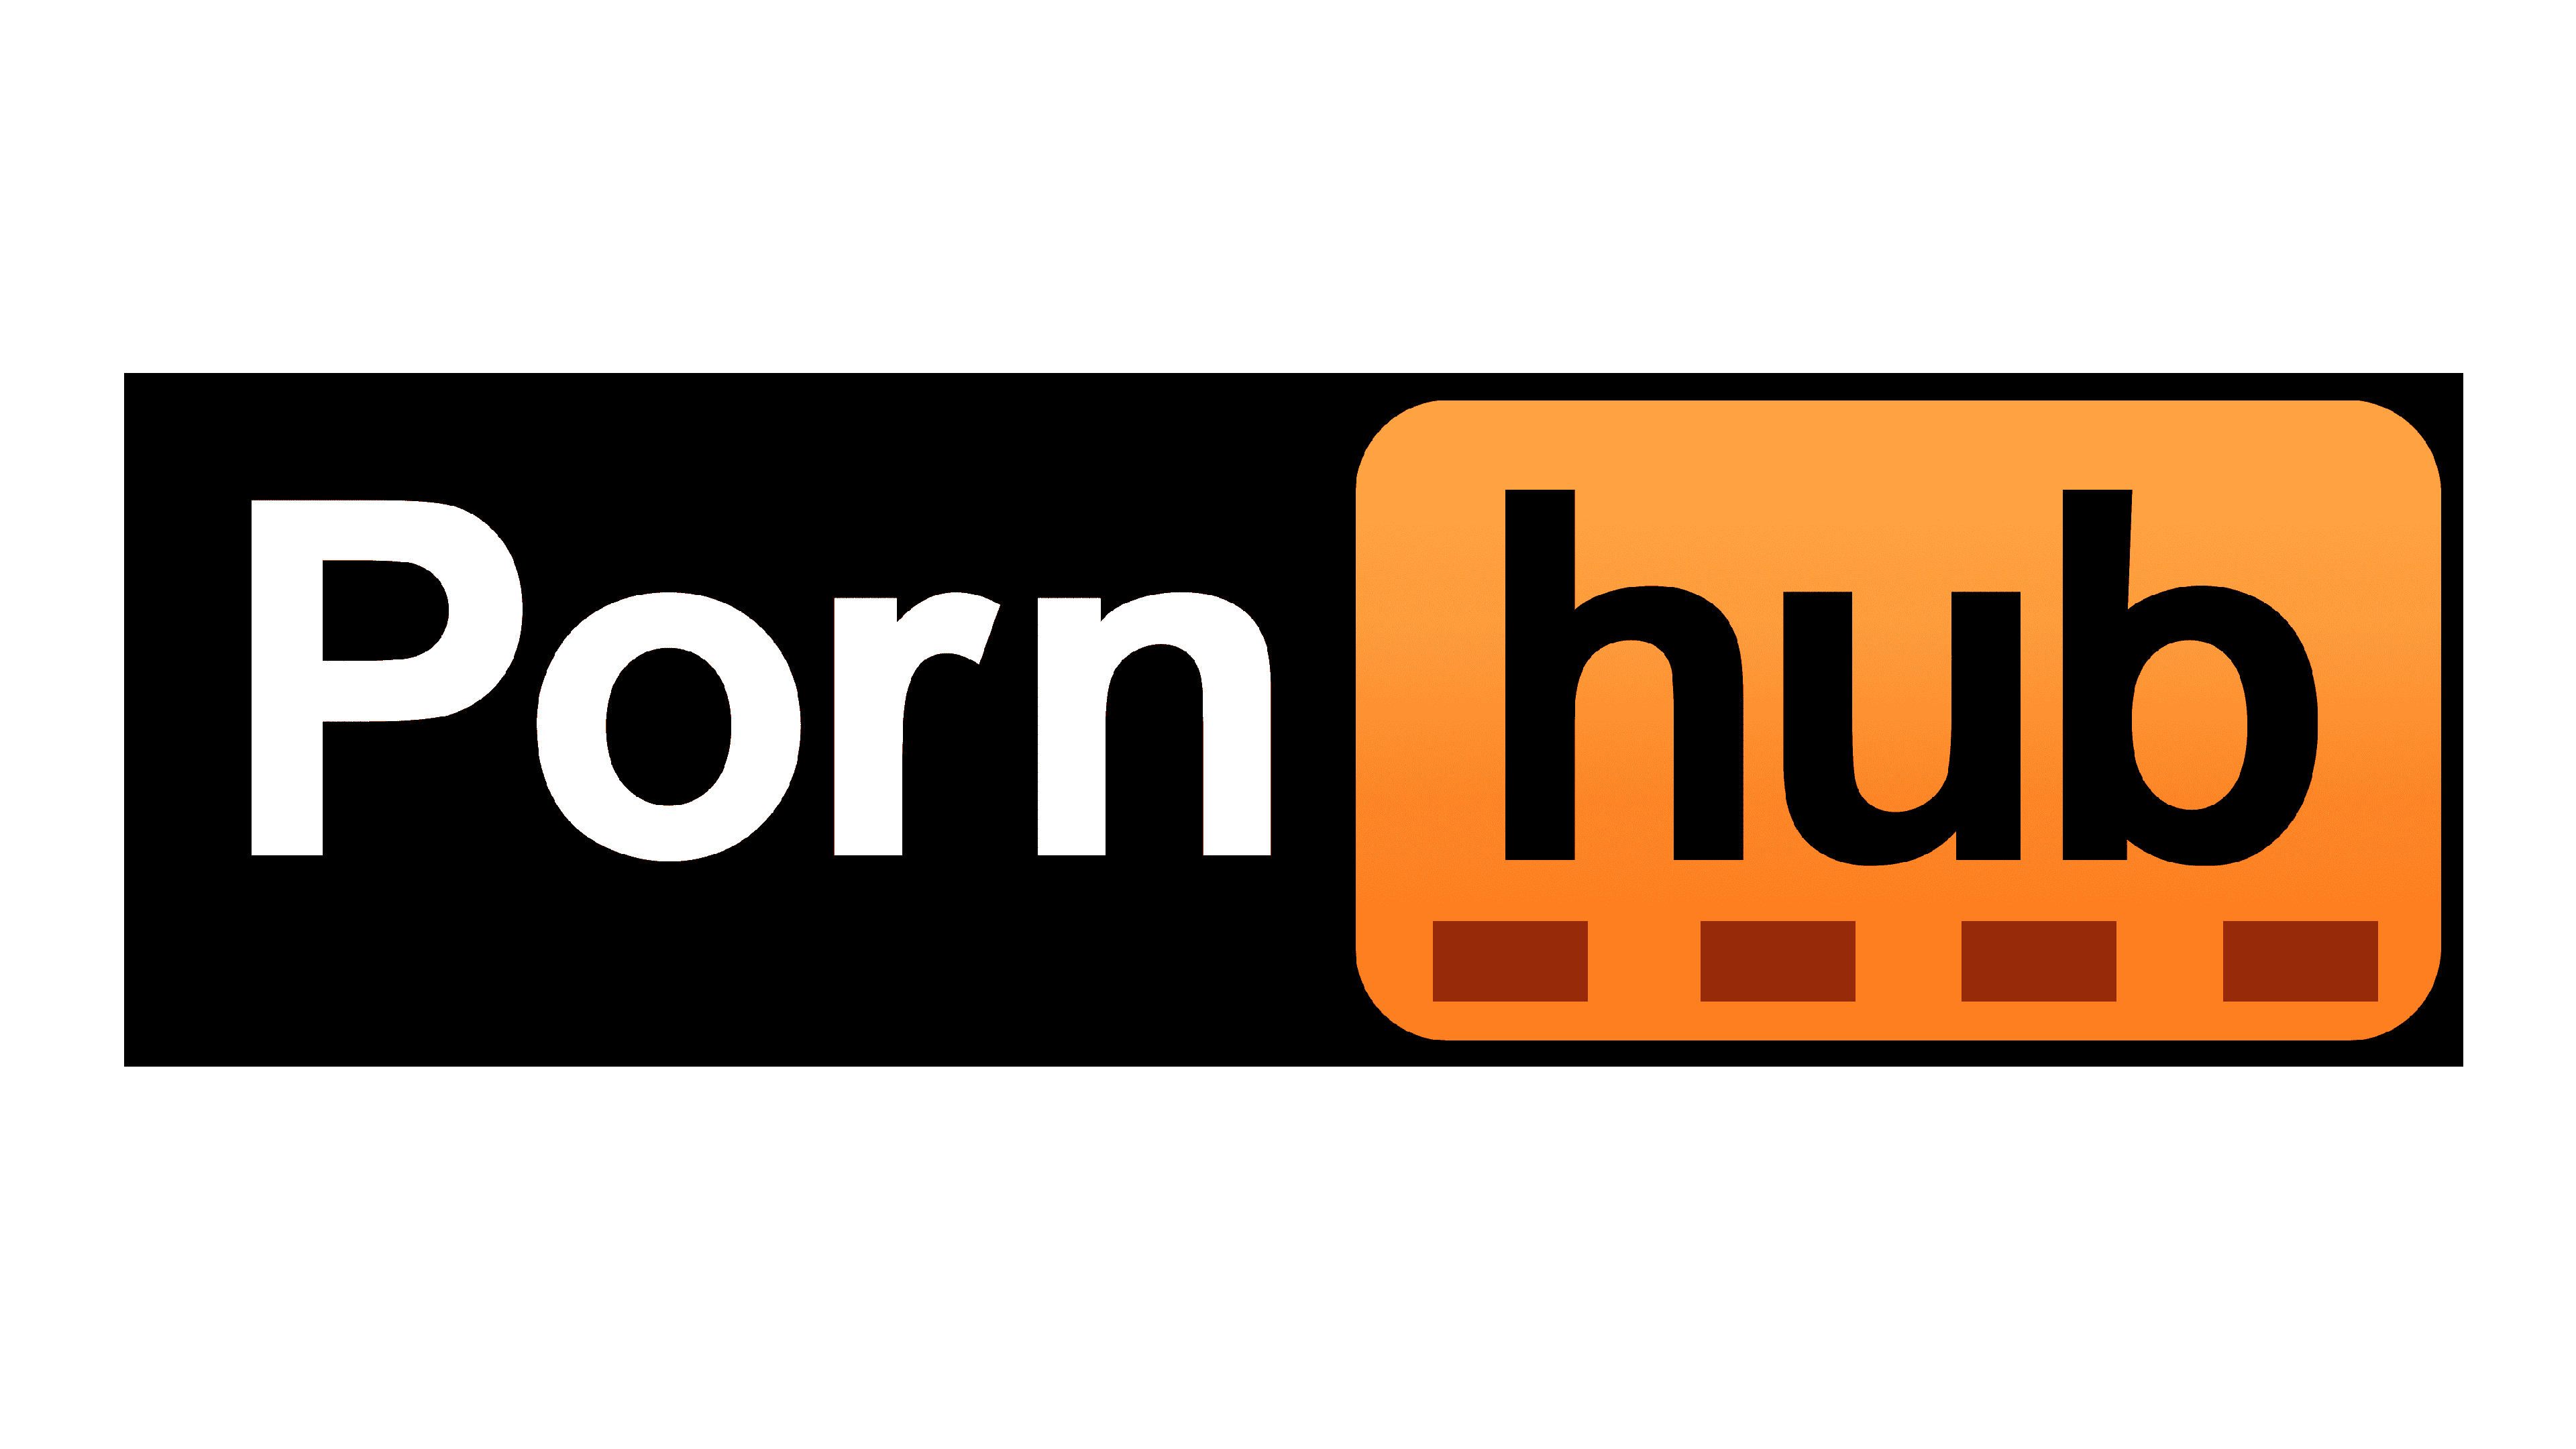 Ponrhun - Pornhub Logo and symbol, meaning, history, PNG, new